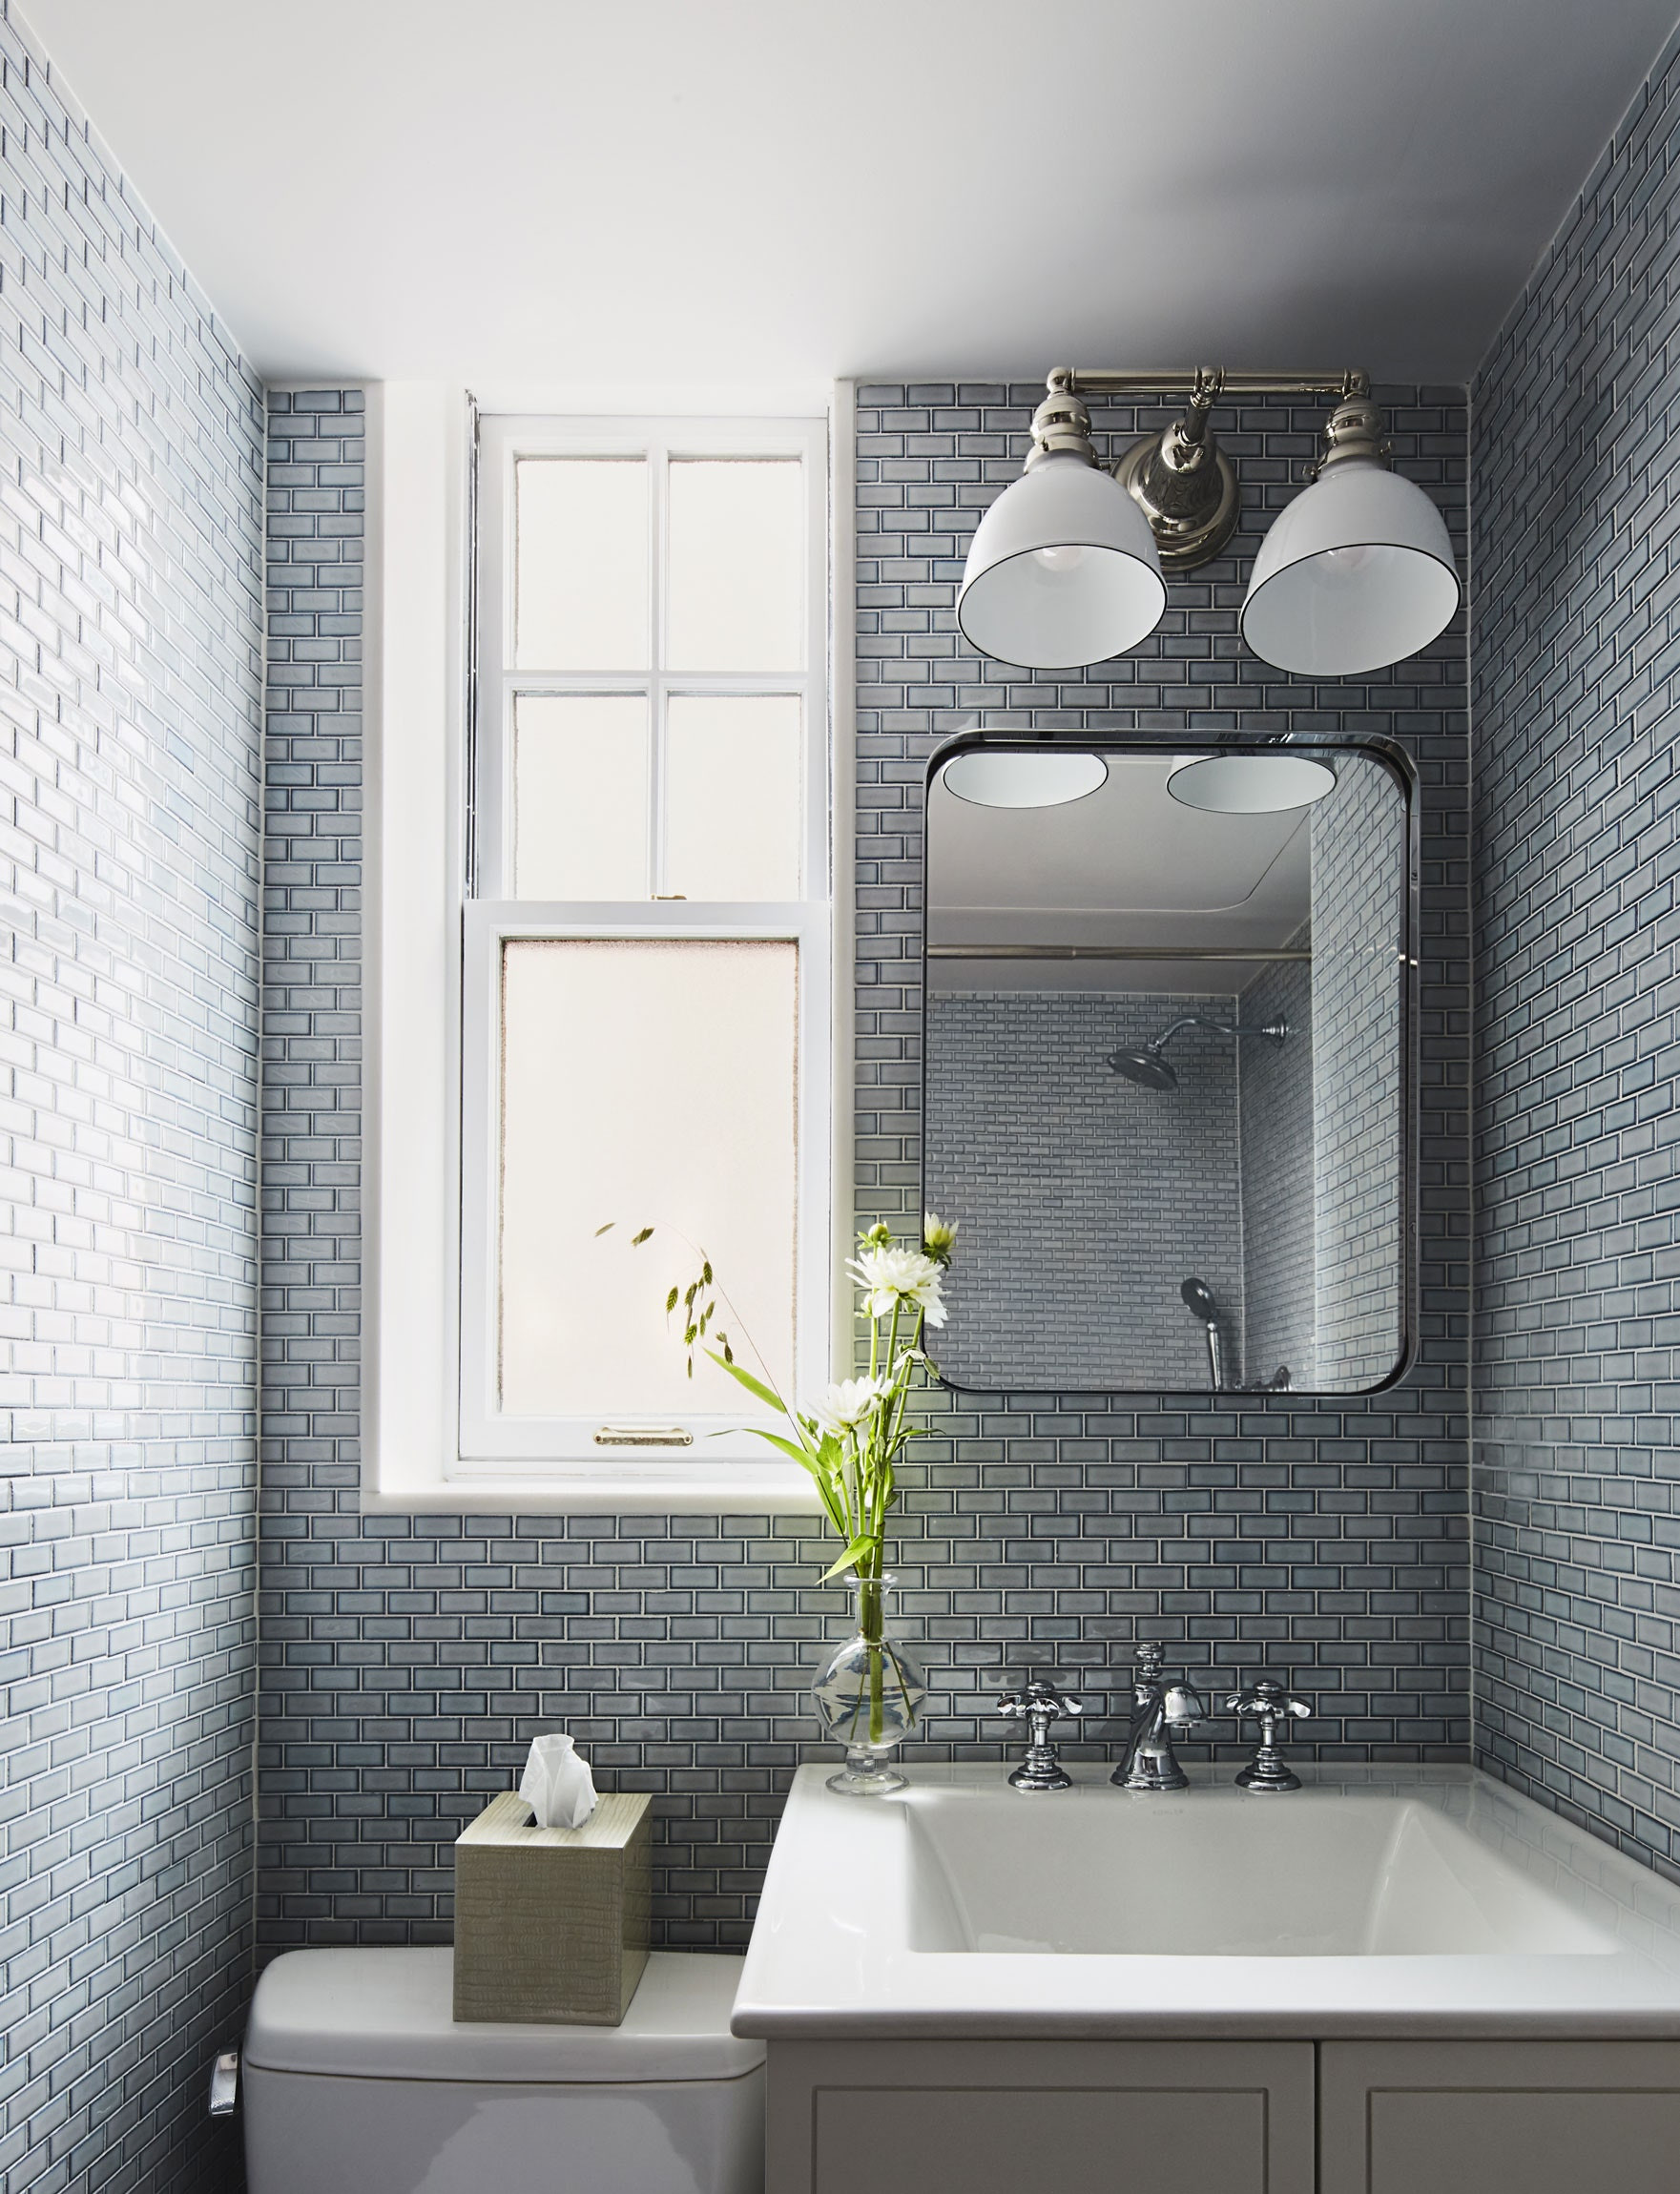 Small Bathroom Tiles Design
 This Bathroom Tile Design Idea Changes Everything